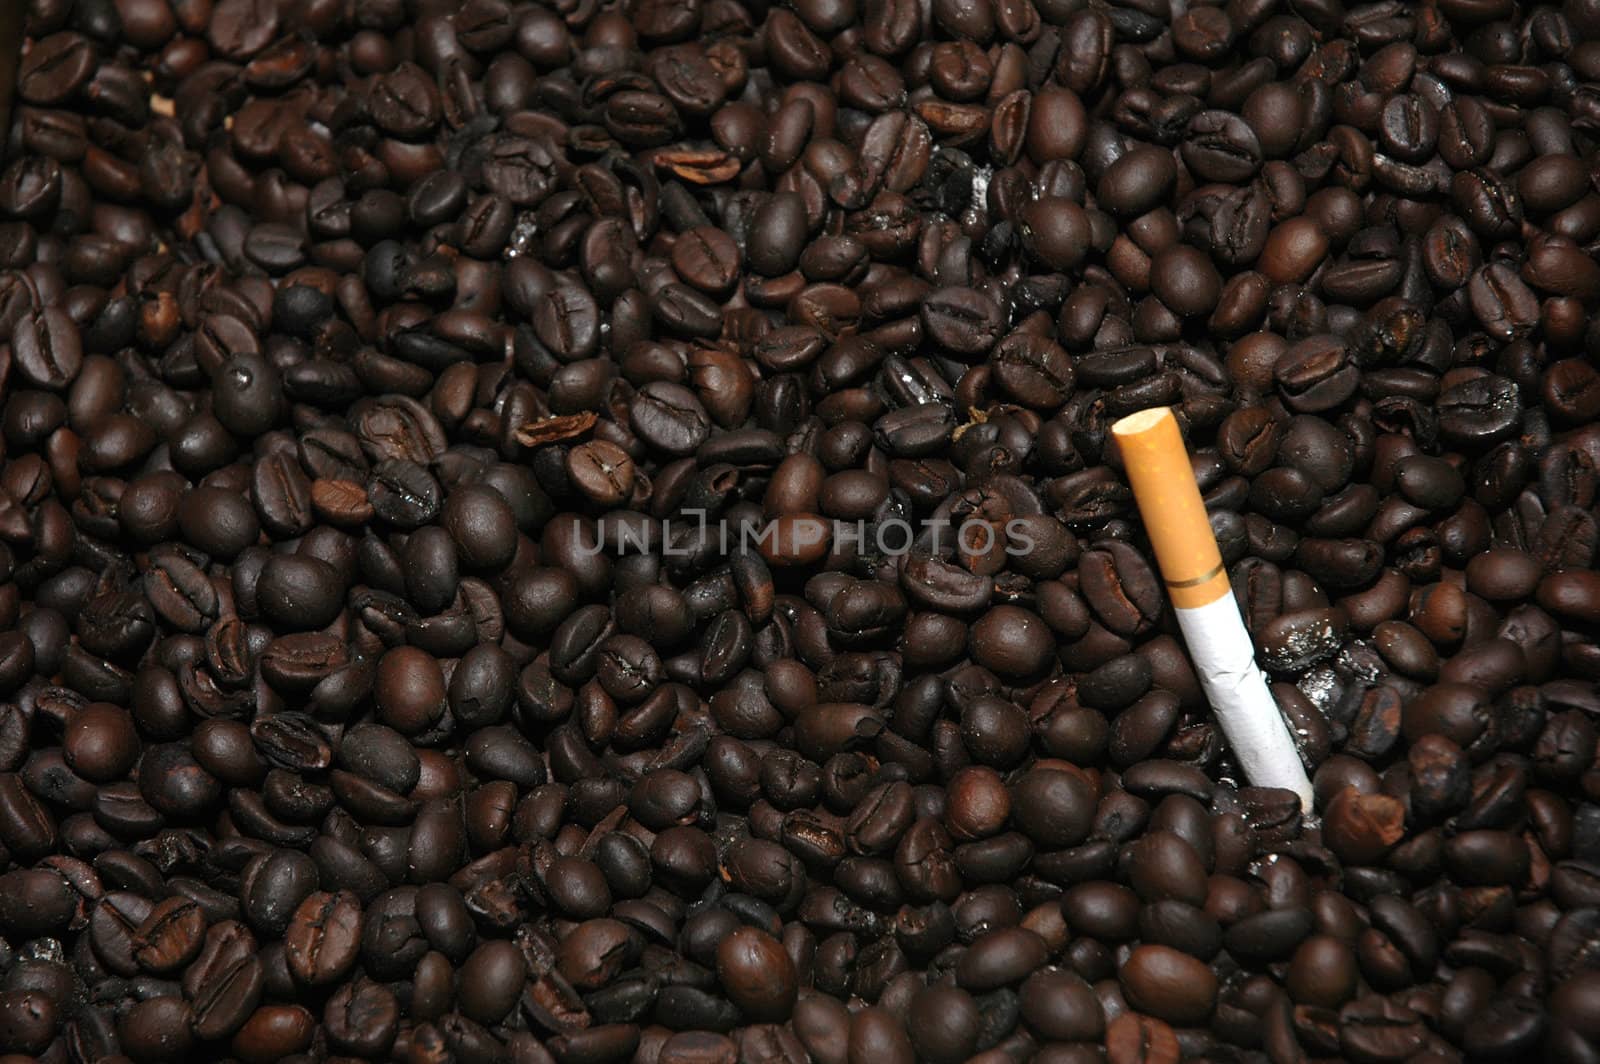 coffee beans as the ashtray to neutralize cigarette smoke